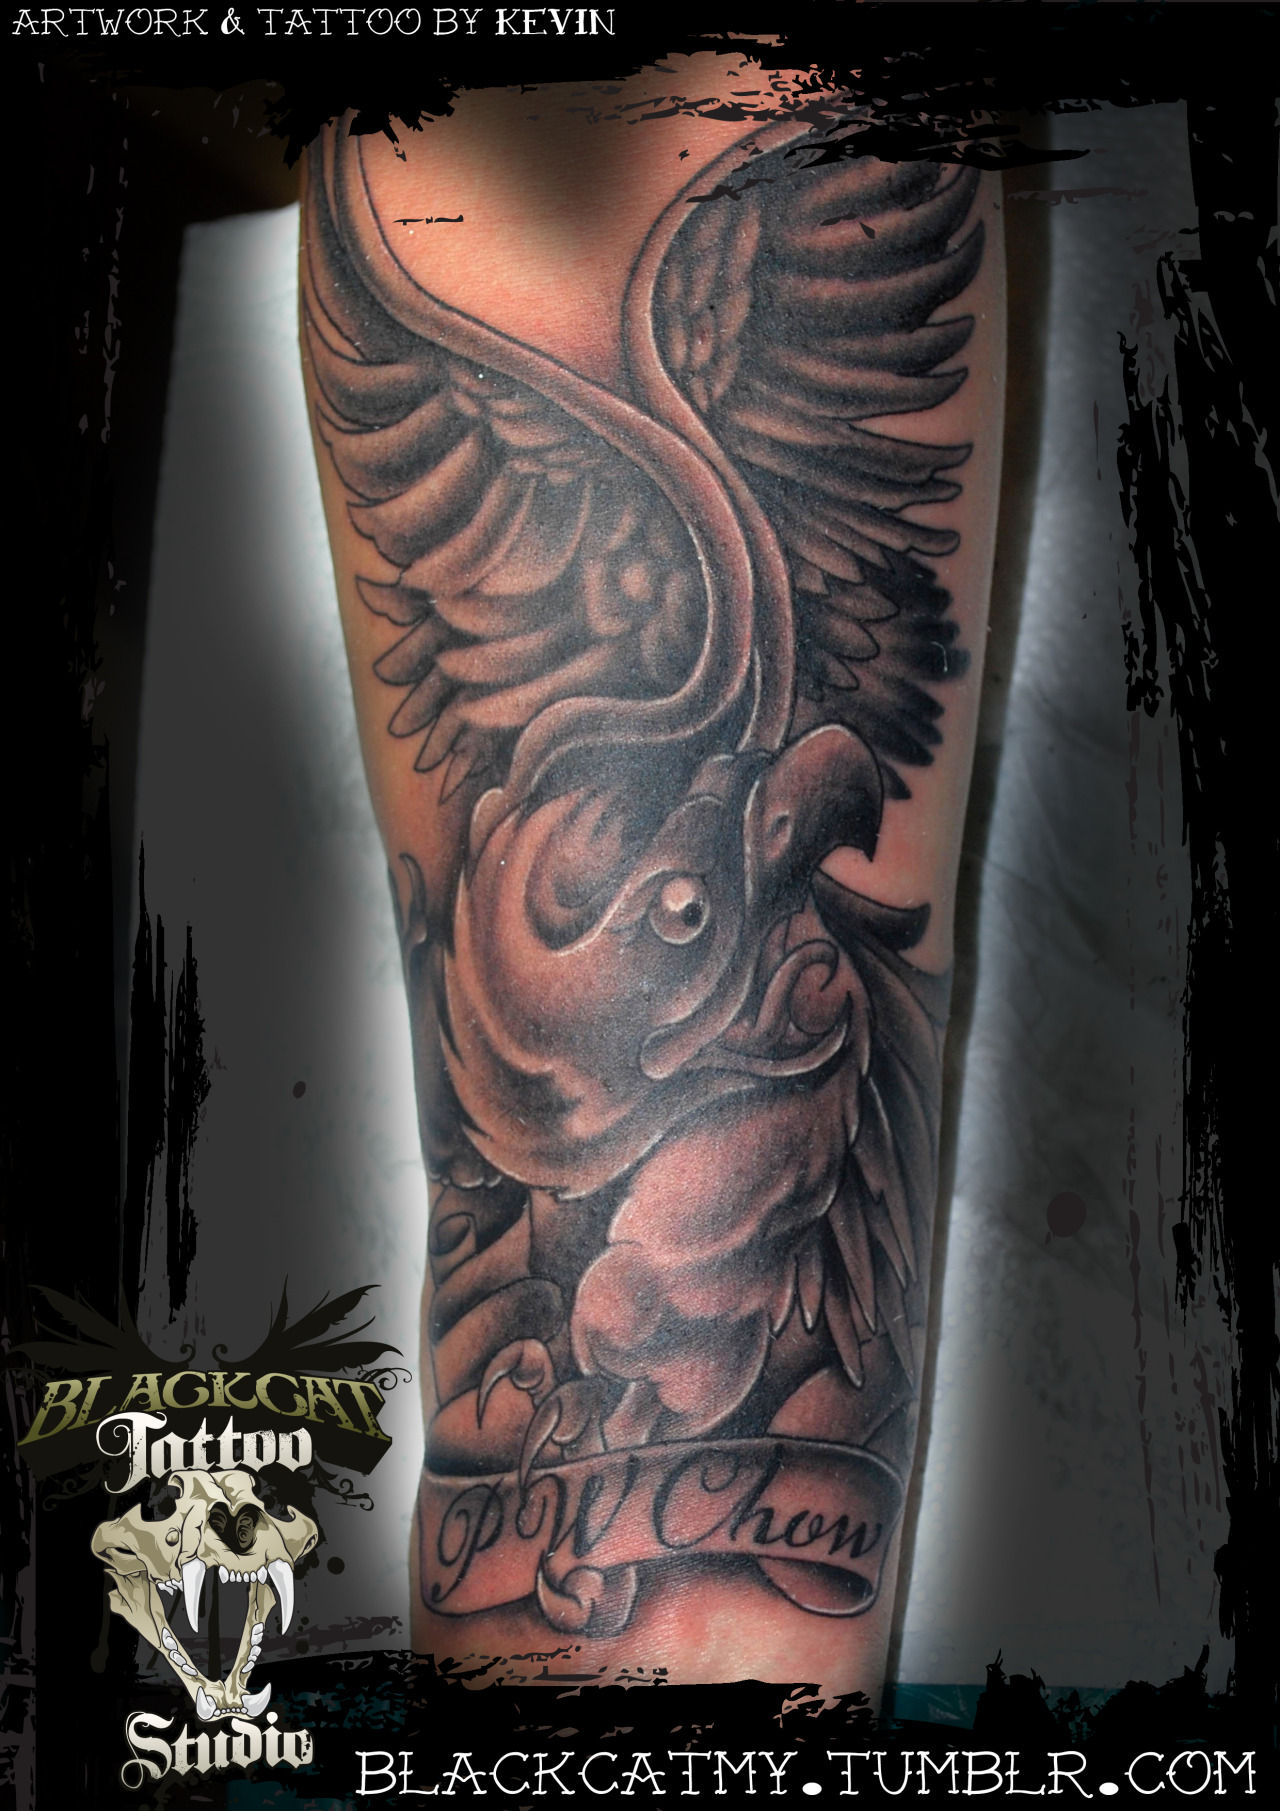 Black Cat Tattoo Studio, Malaysia — Eagle Tattoo on Forearm by Kevin M